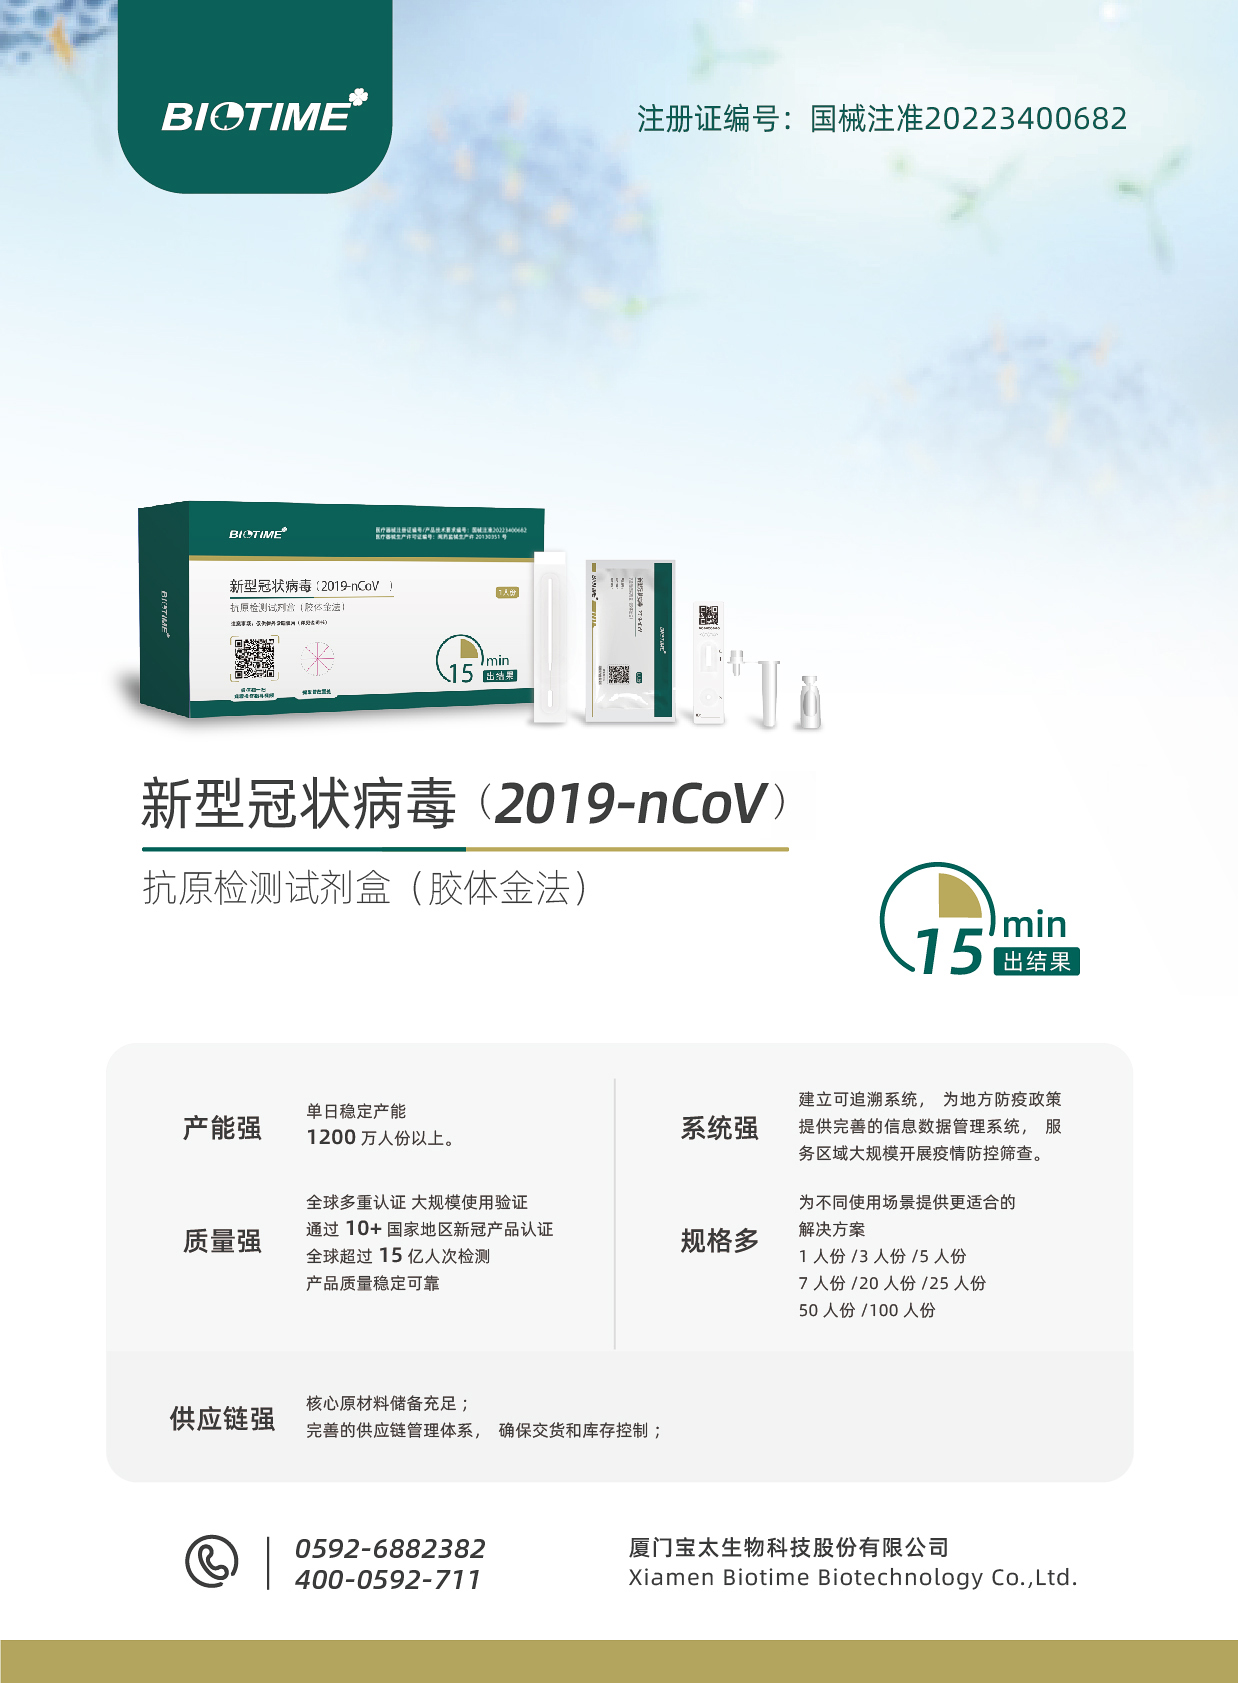 biotime-CN-2019-nCoV-B端彩页-A00-20220419-AB型-印刷版520_画板 1 修改版.jpg